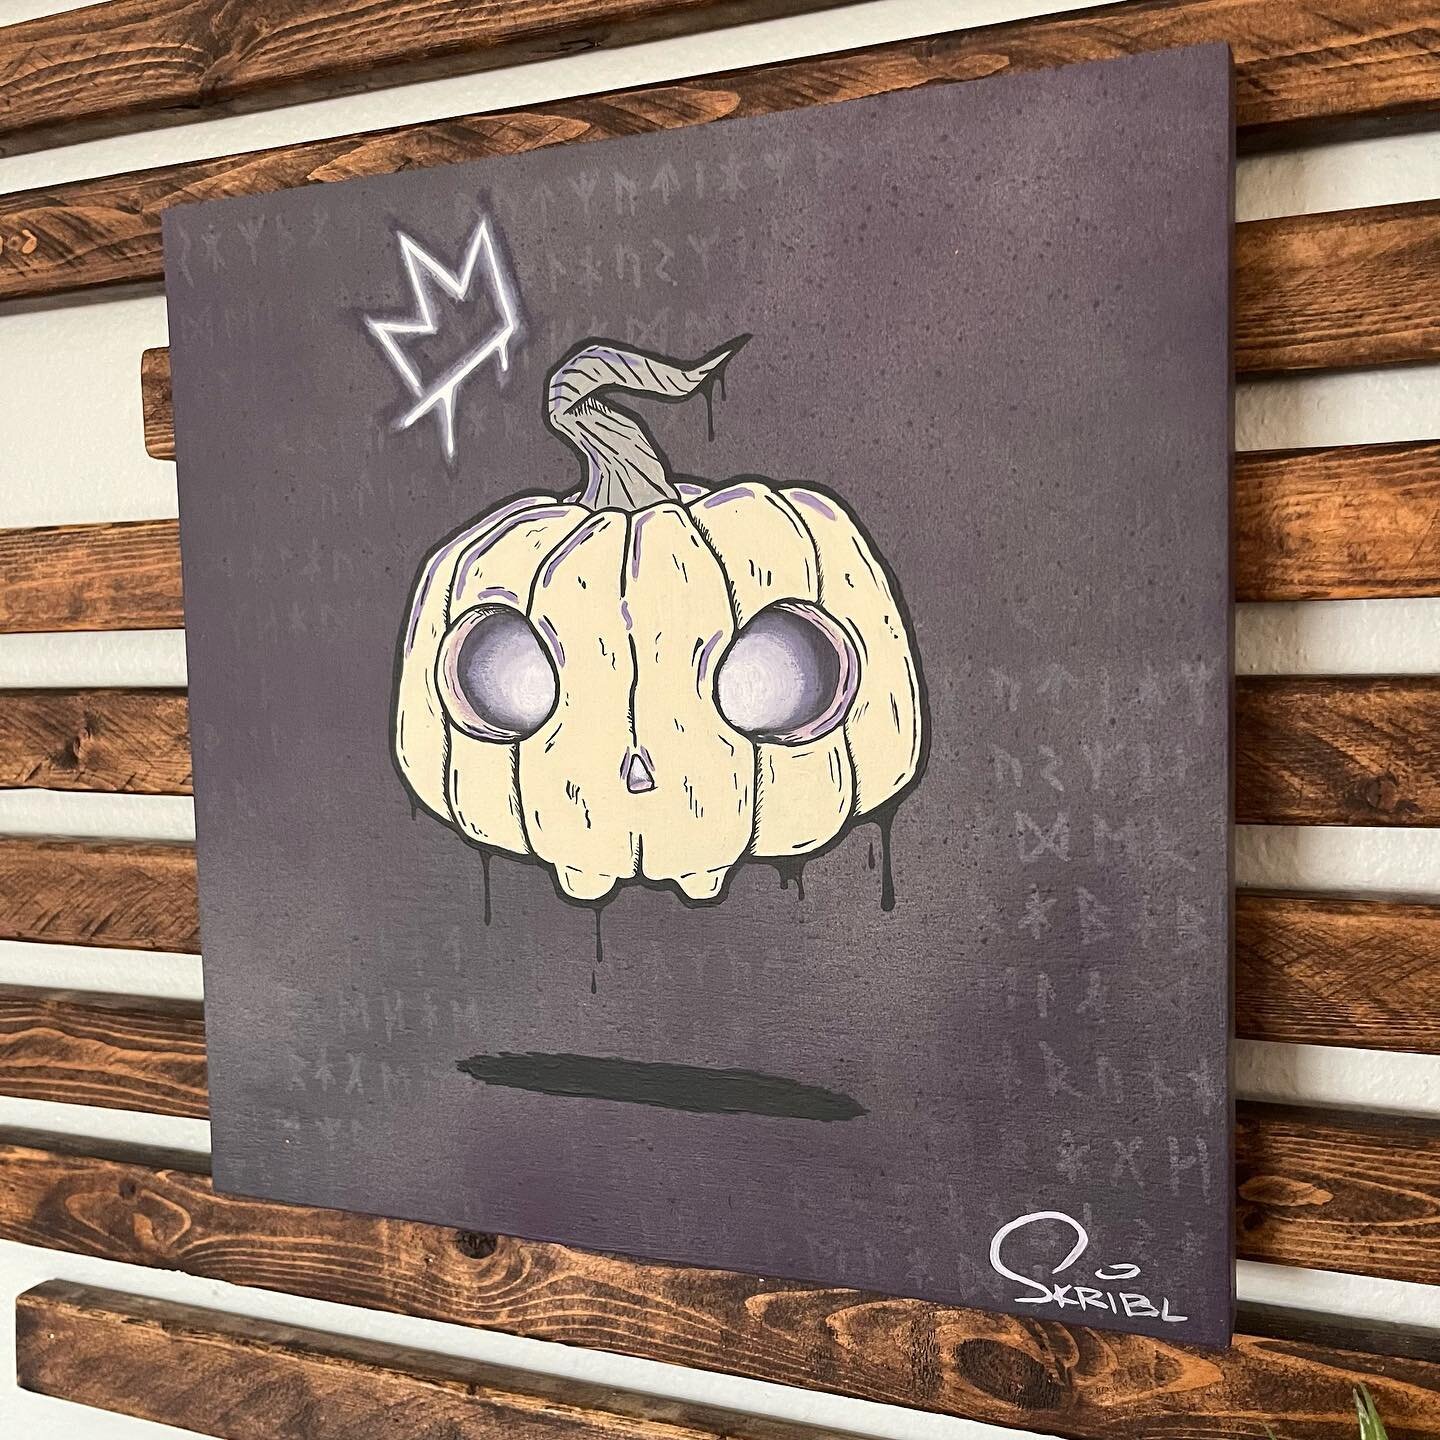 &ldquo;Pumpkin Reaper&rdquo;

12&rdquo;x12&rdquo; / 30cm x 30cm
Spray Paint &amp; acrylic on wood

Painting available for purchase! 

#art #acrylicpainting #spraypaint #skullart #skull #pumpkin #jackolantern #halloweenart #darkart #spookyart #artfors